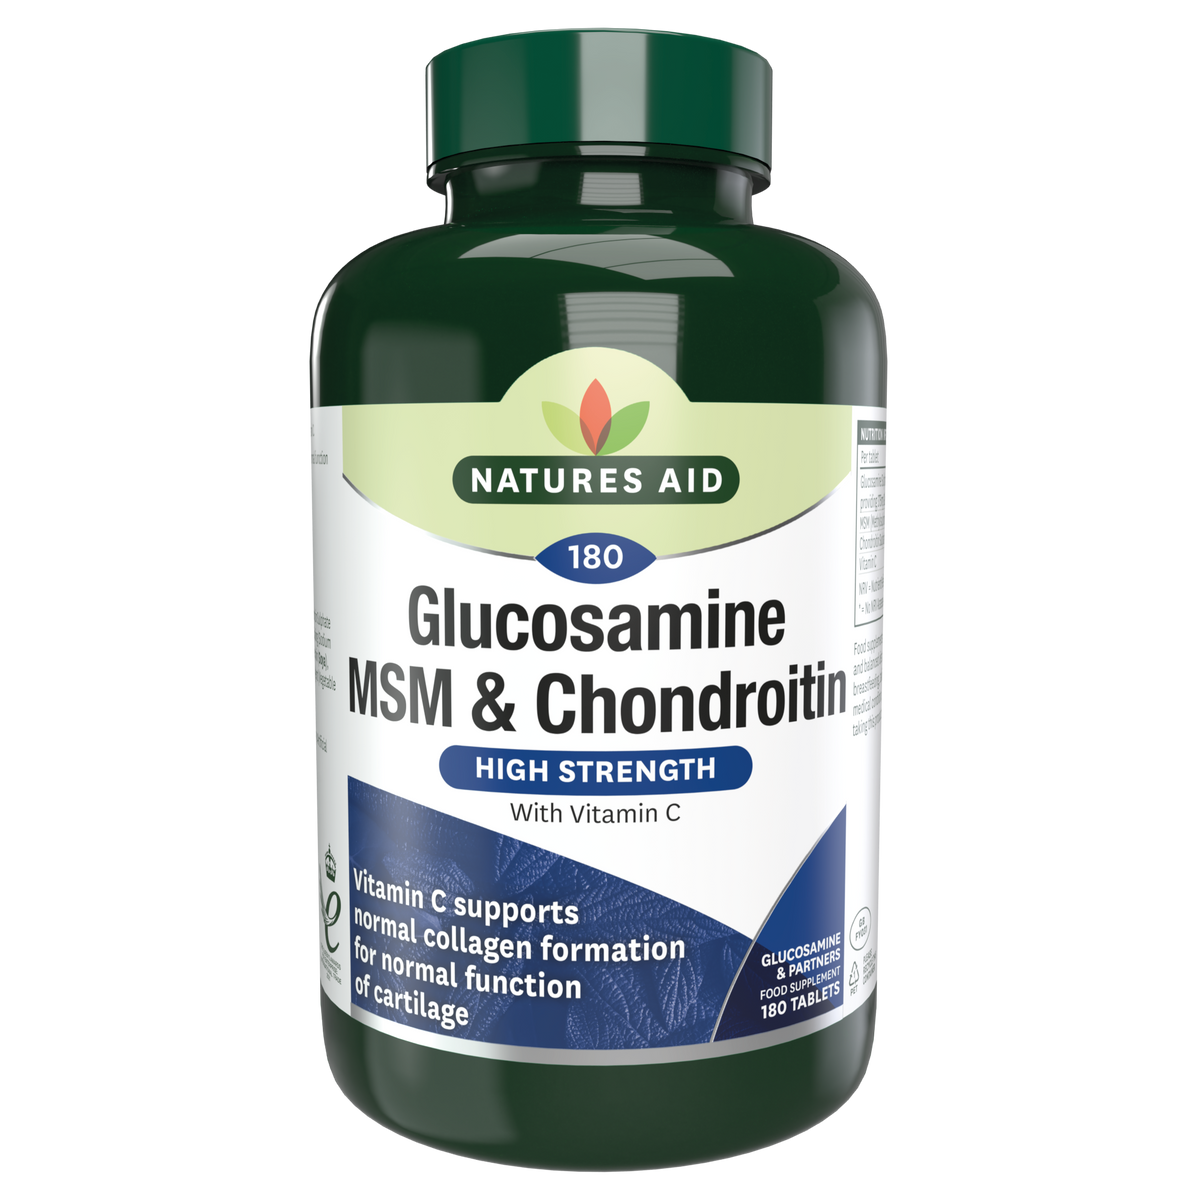 Natures Aid Glucosamine MSM & Chondroitin (180)